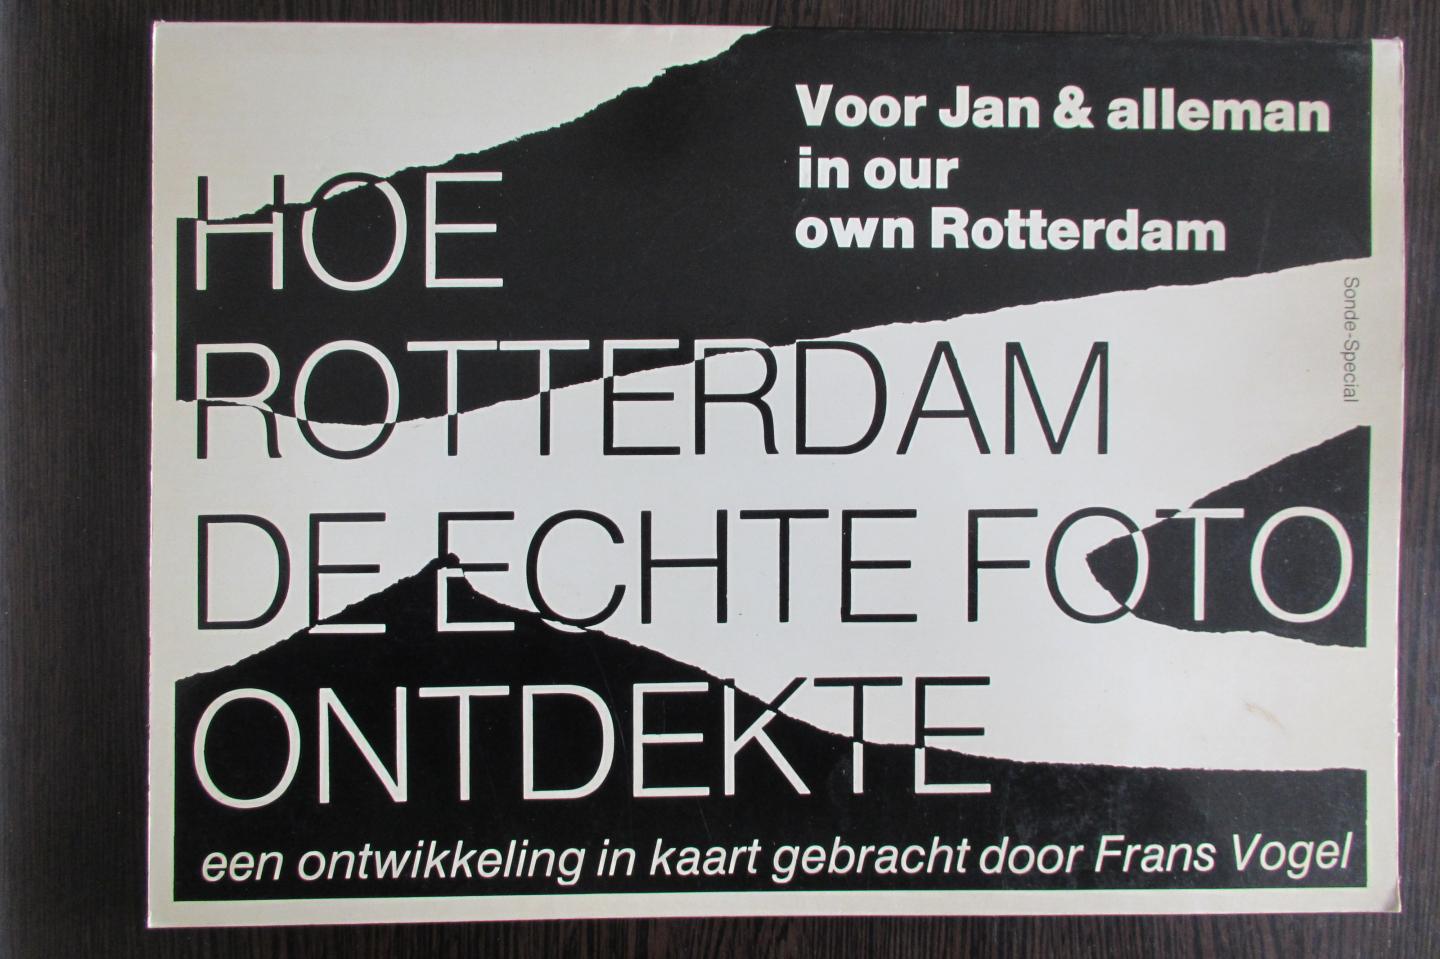 Vogel, Frans - Hoe Rotterdam de echte foto ontdekte / voor Jan & alleman in our own Rotterdam